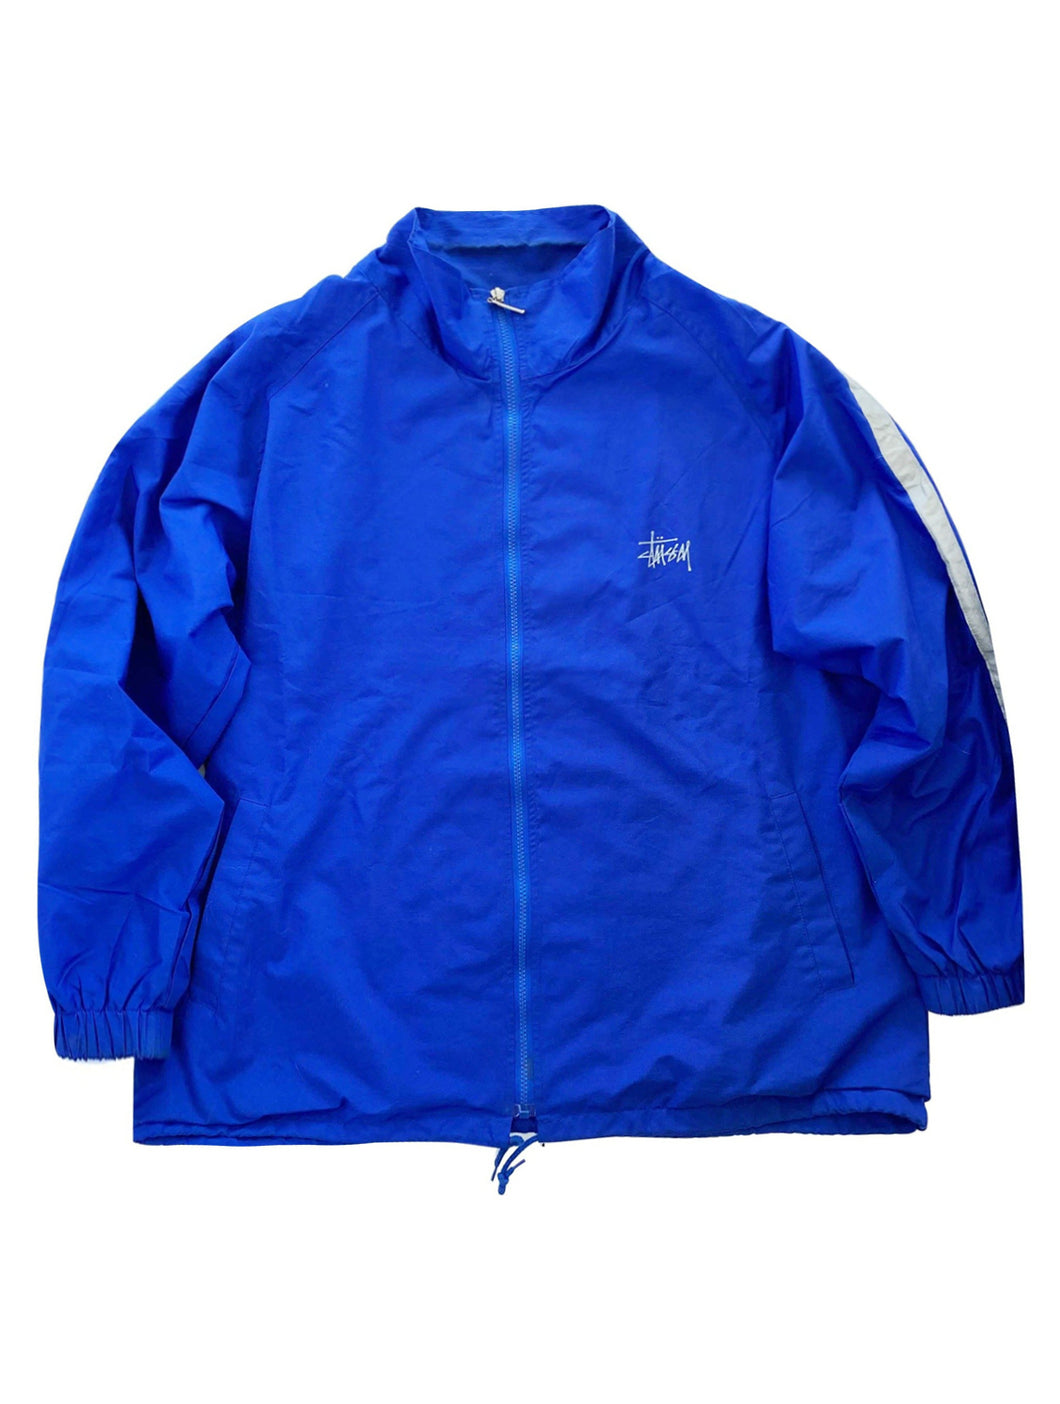 Stussy Blue Track Jacket